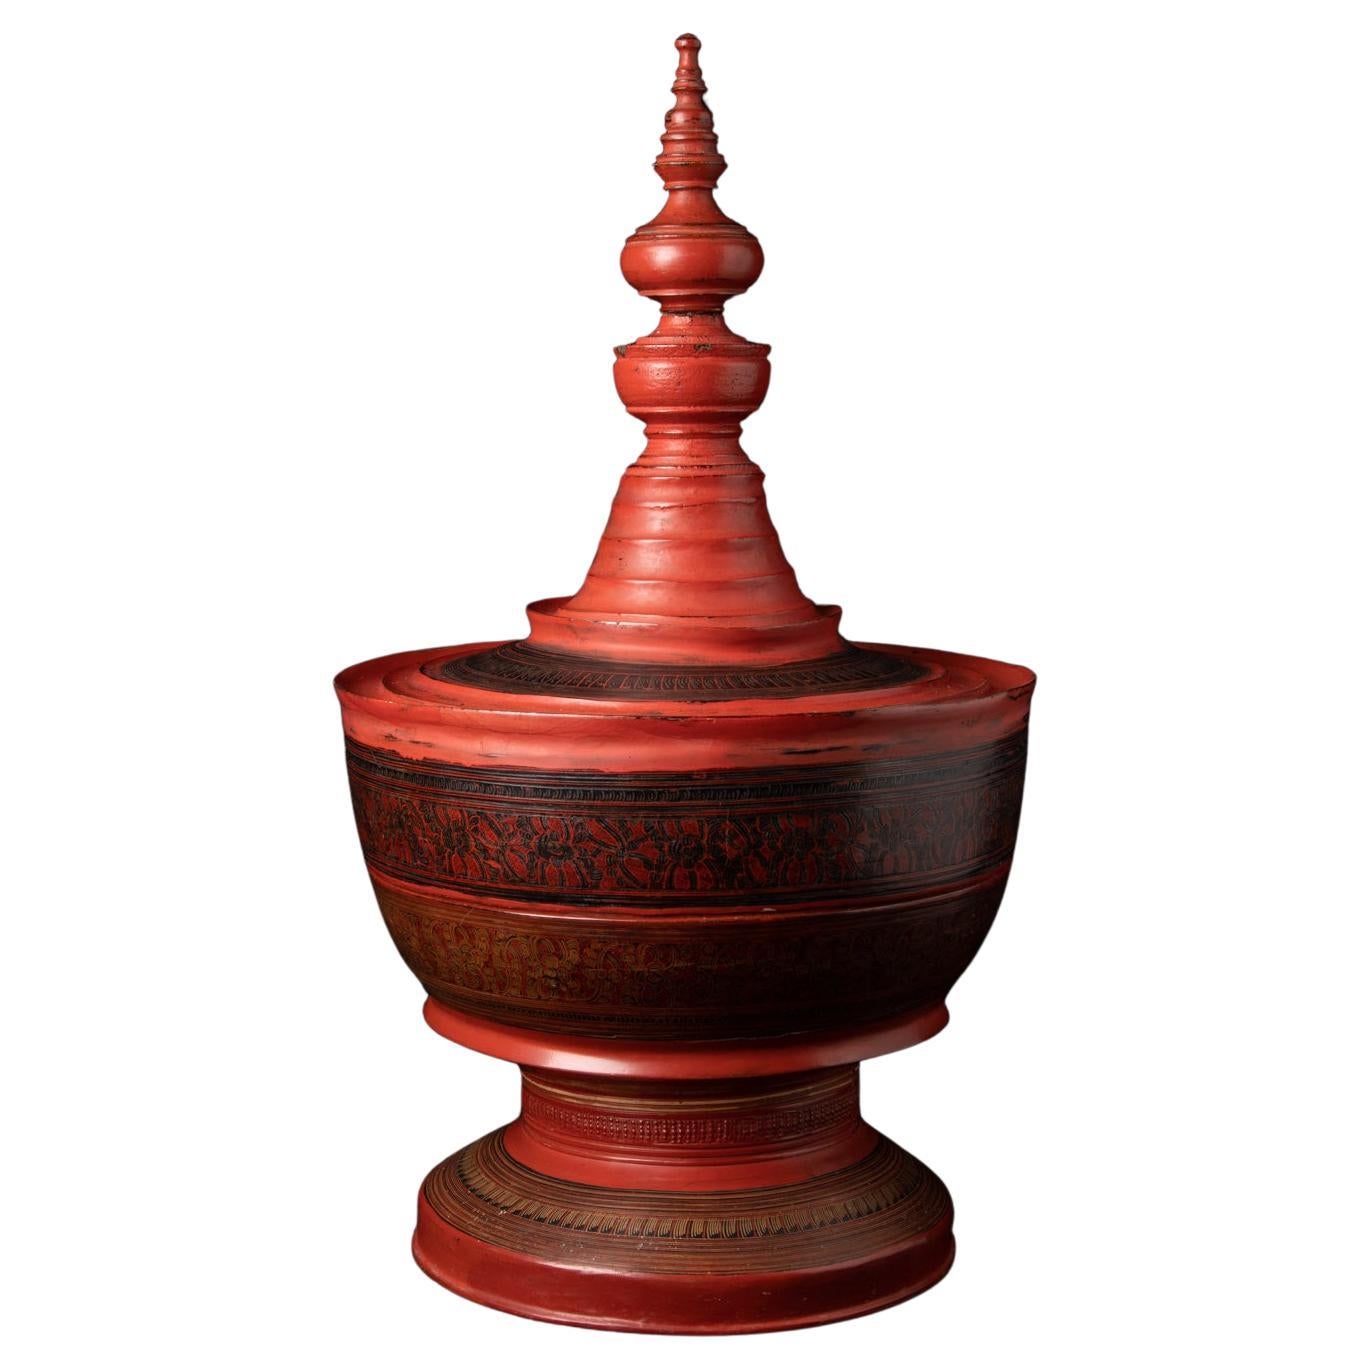  19th century Antique Burmese offering vessel from Burma - Original Buddhas